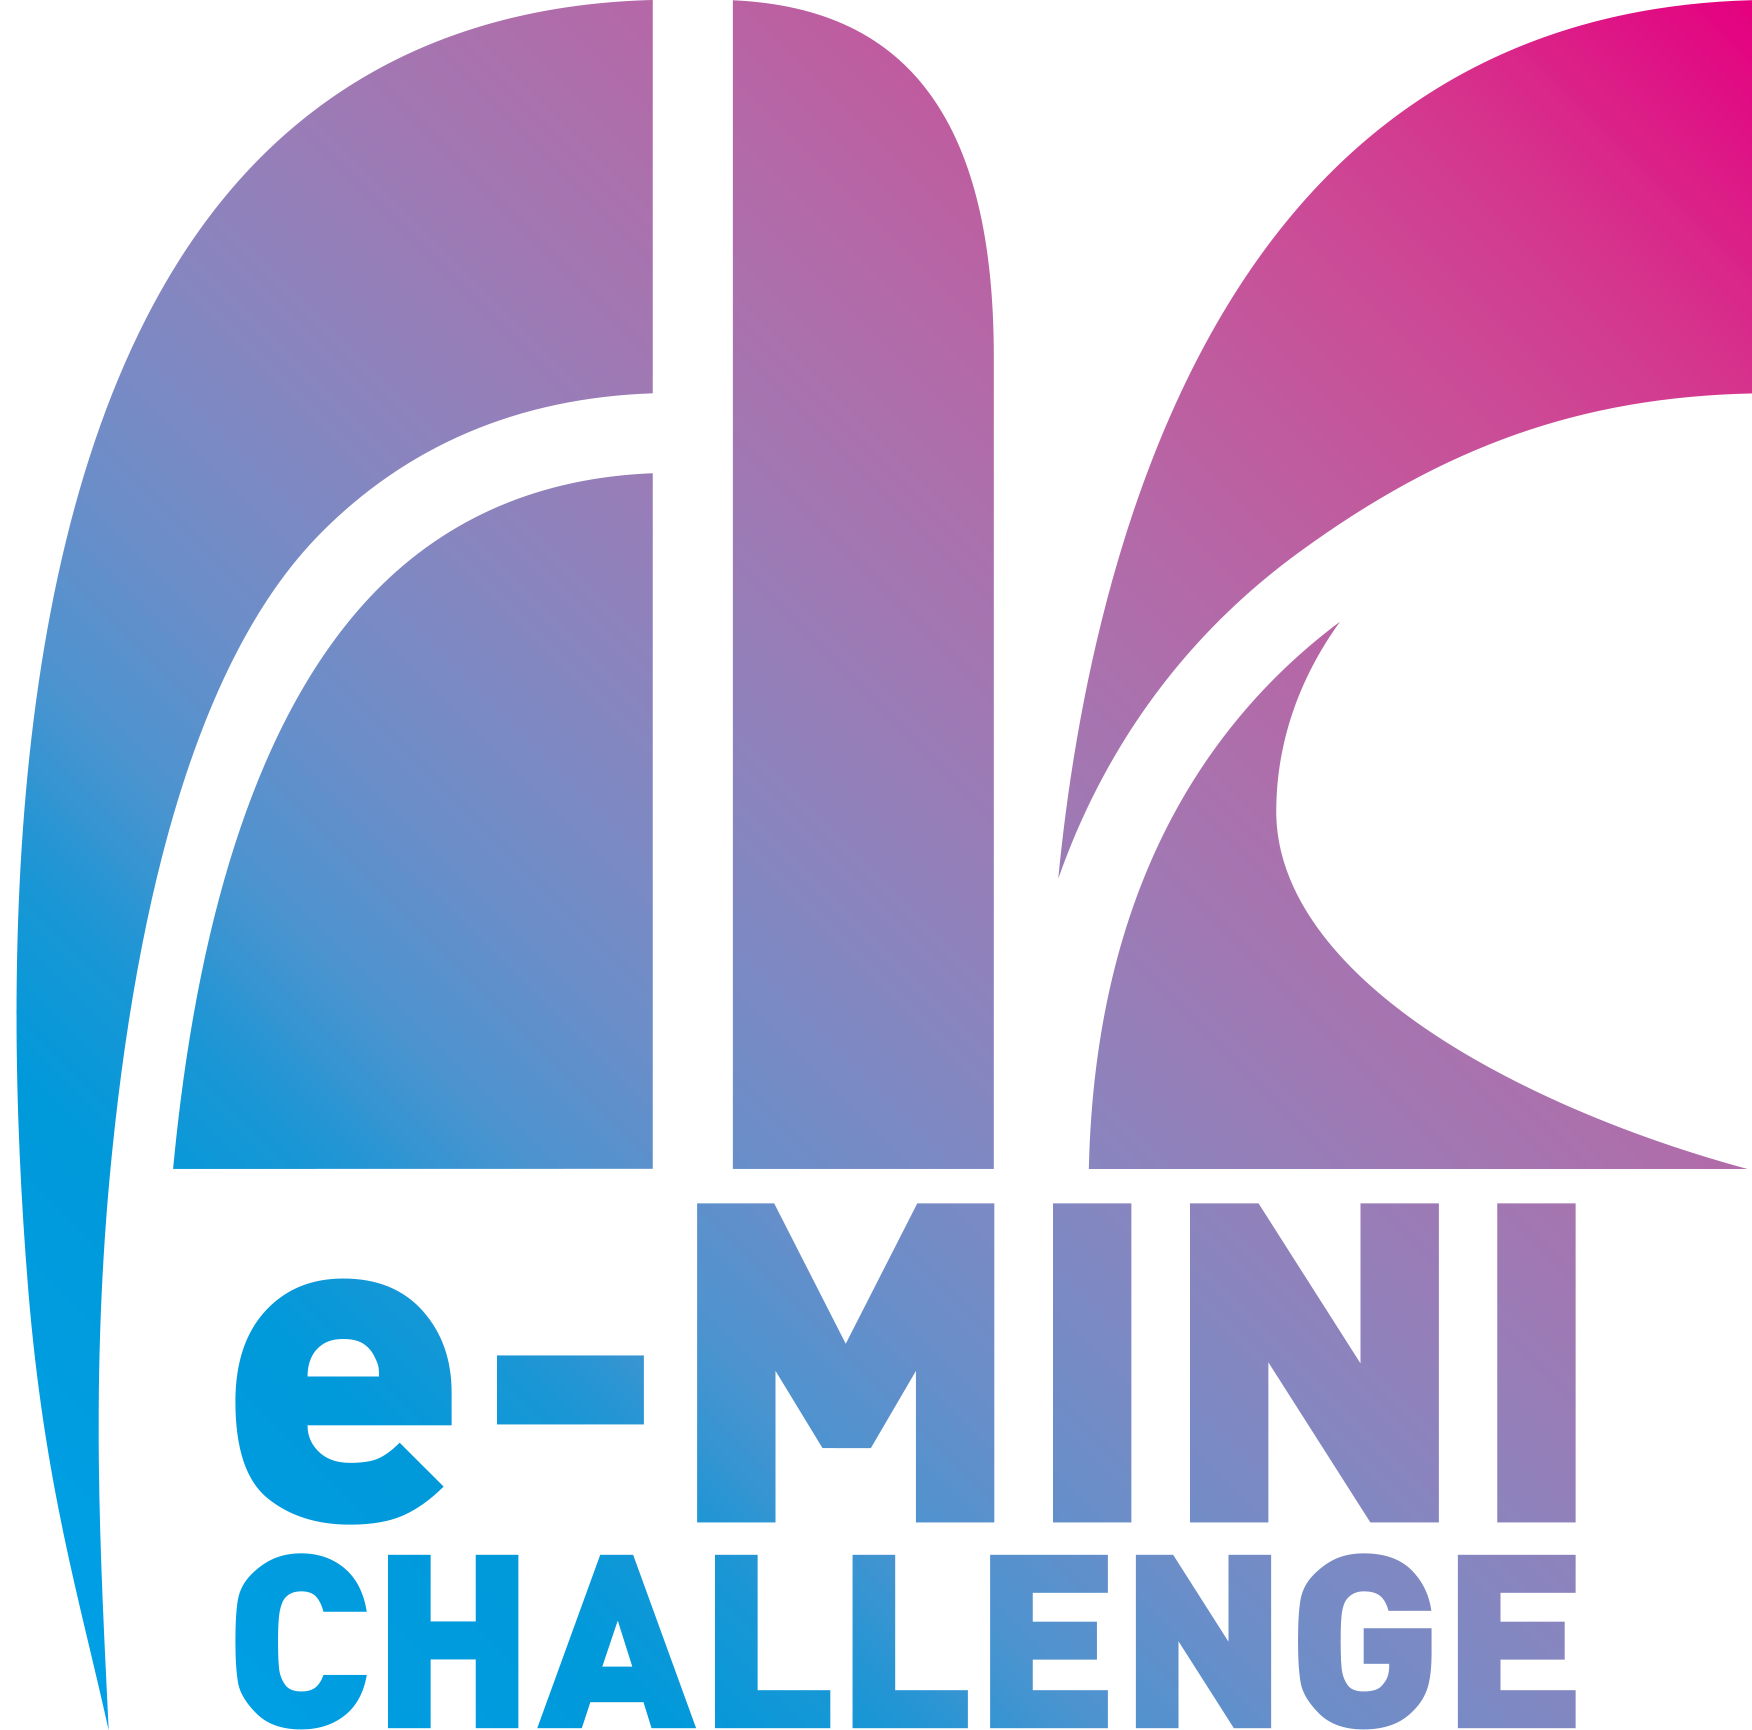 e-MINI CHALLENGE® 2022 S1 Rd.8 A/B ポイントランキング公開